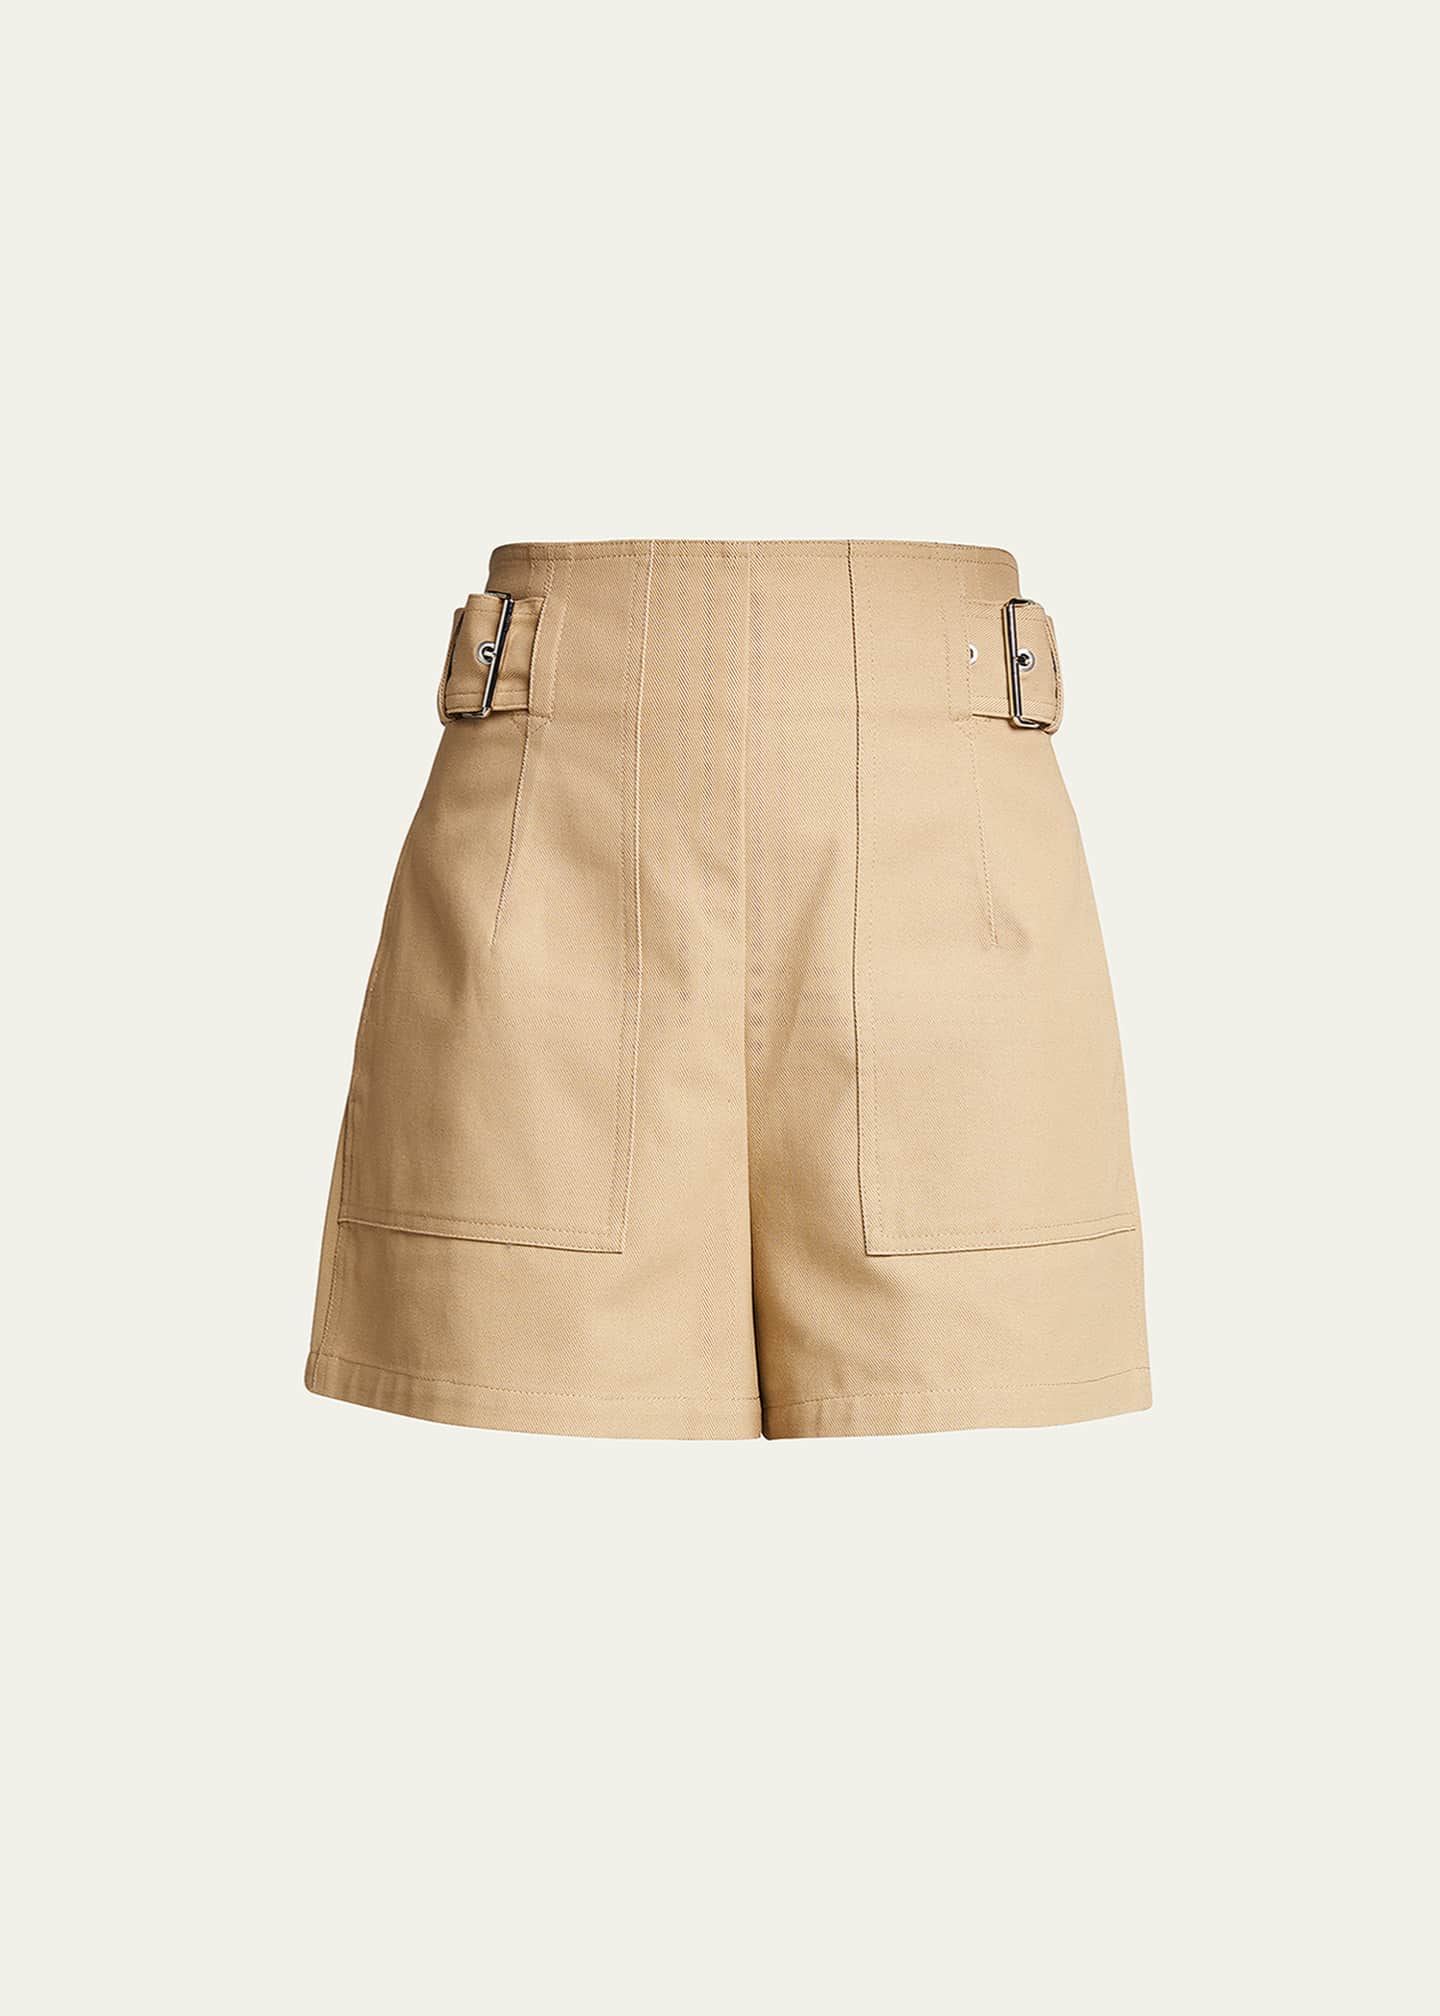 3.1 Phillip Lim pleat-detailing belted shorts - Neutrals